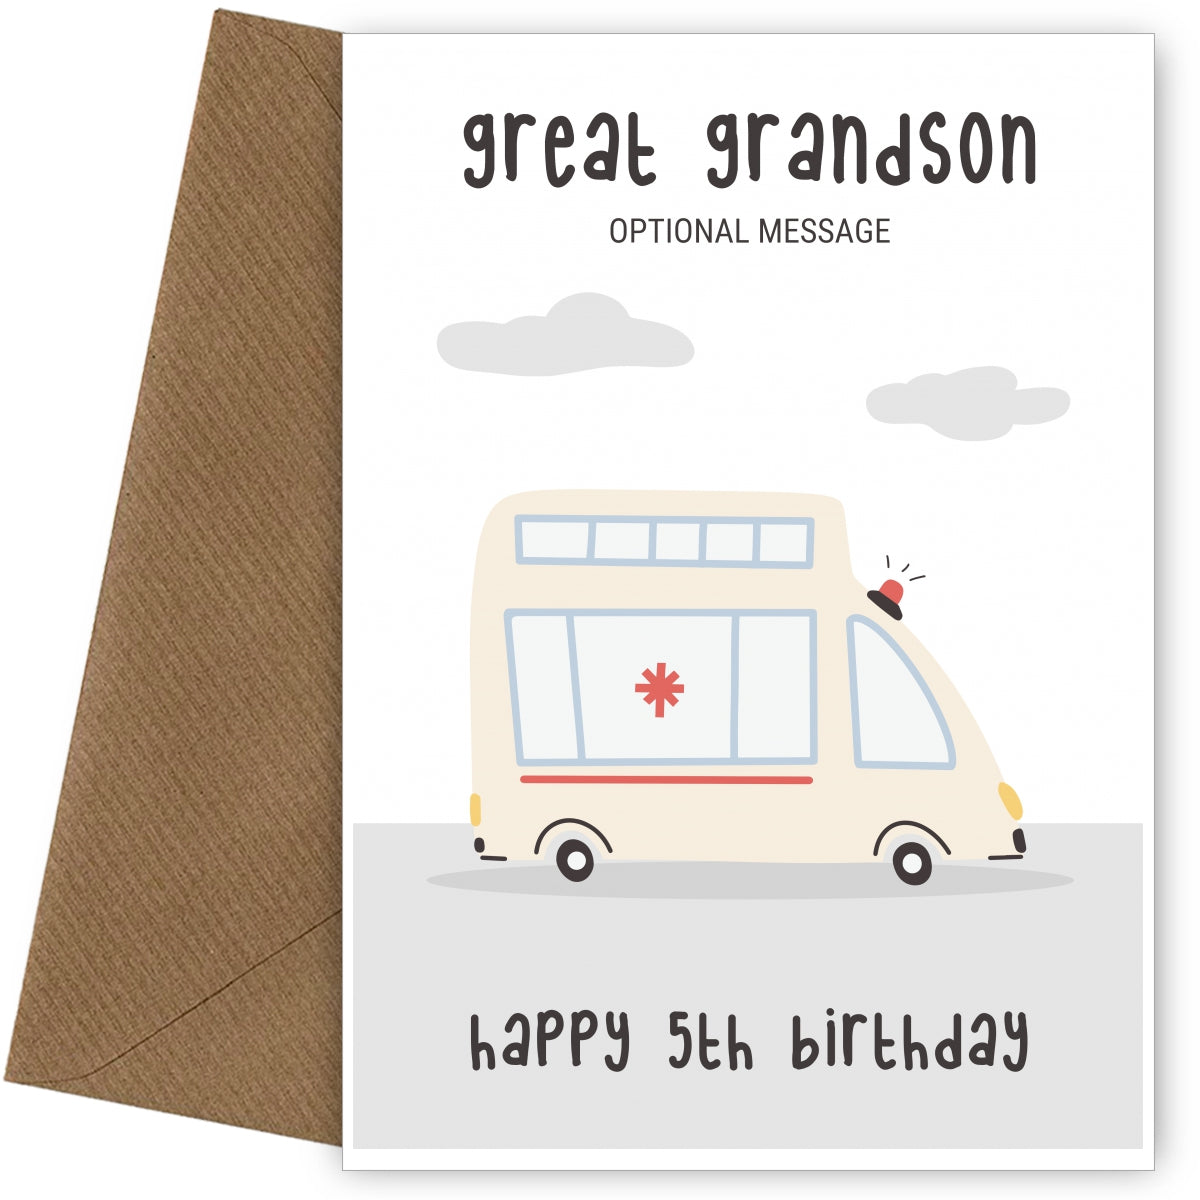 Fun Vehicles 5th Birthday Card for Great Grandson - Ambulance